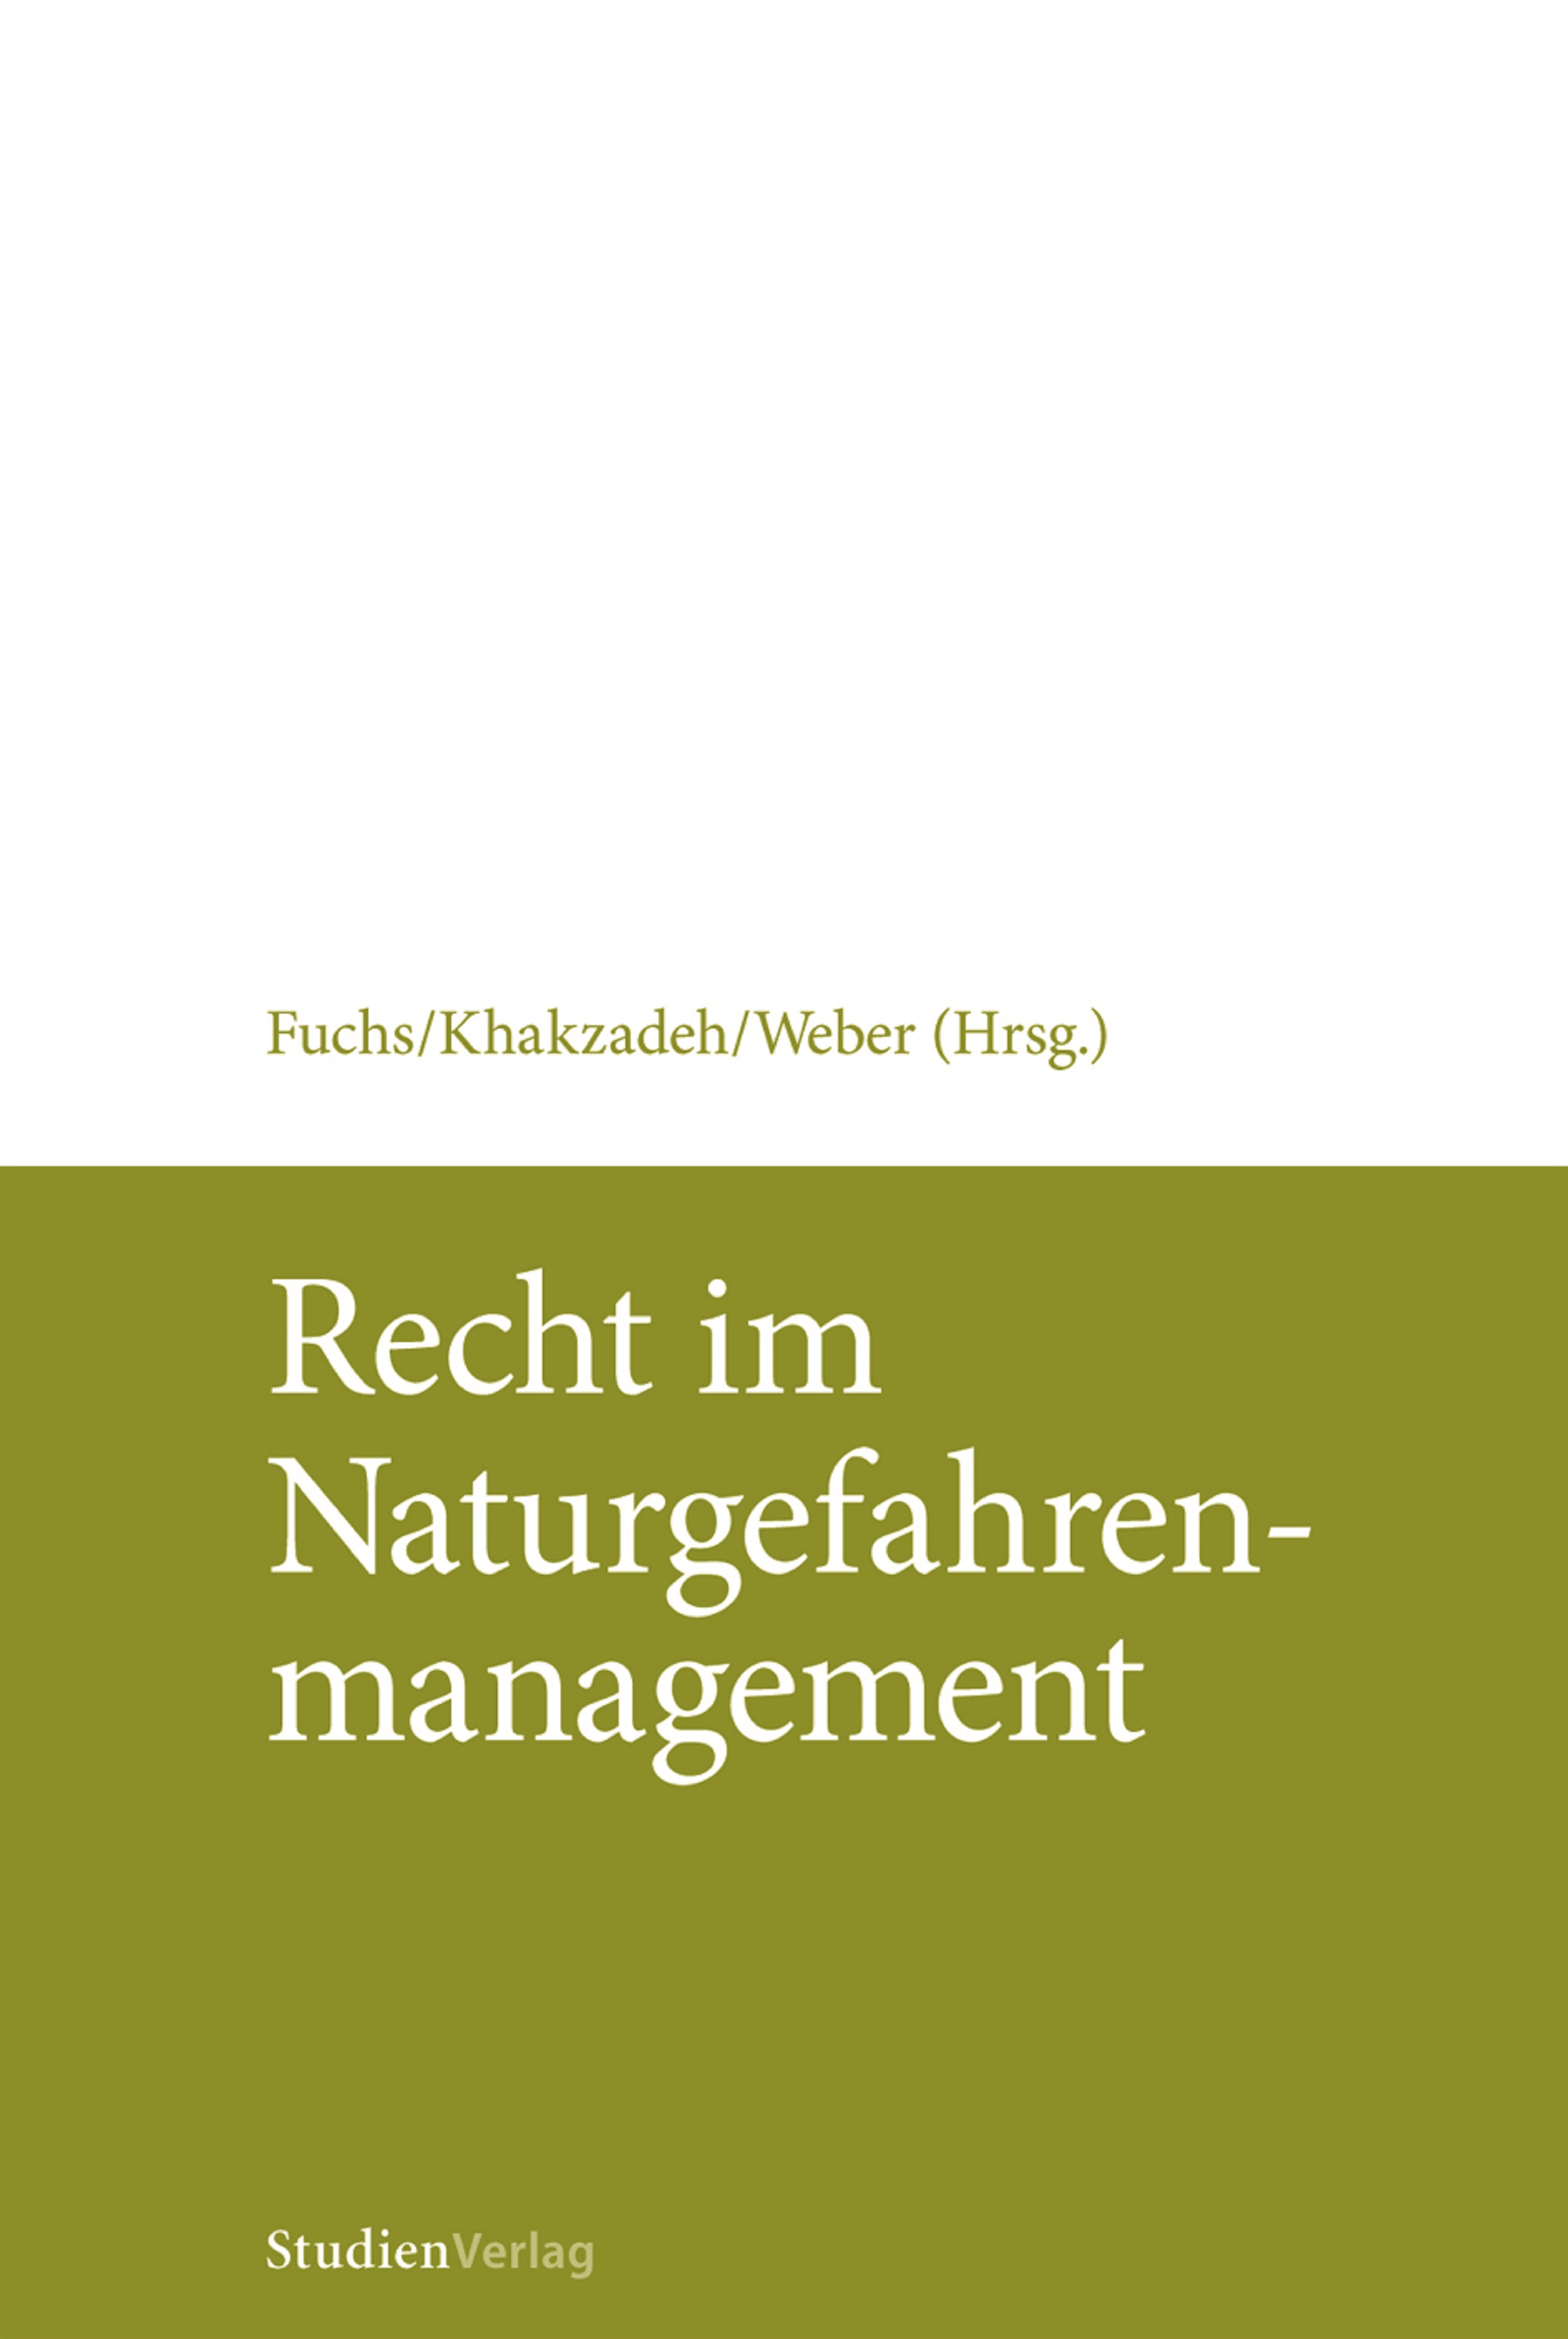 Recht im Naturgefahrenmanagement (f. Österreich) - Fuchs, Sven|Khakzadeh, Lamiss M.|Weber, Karl